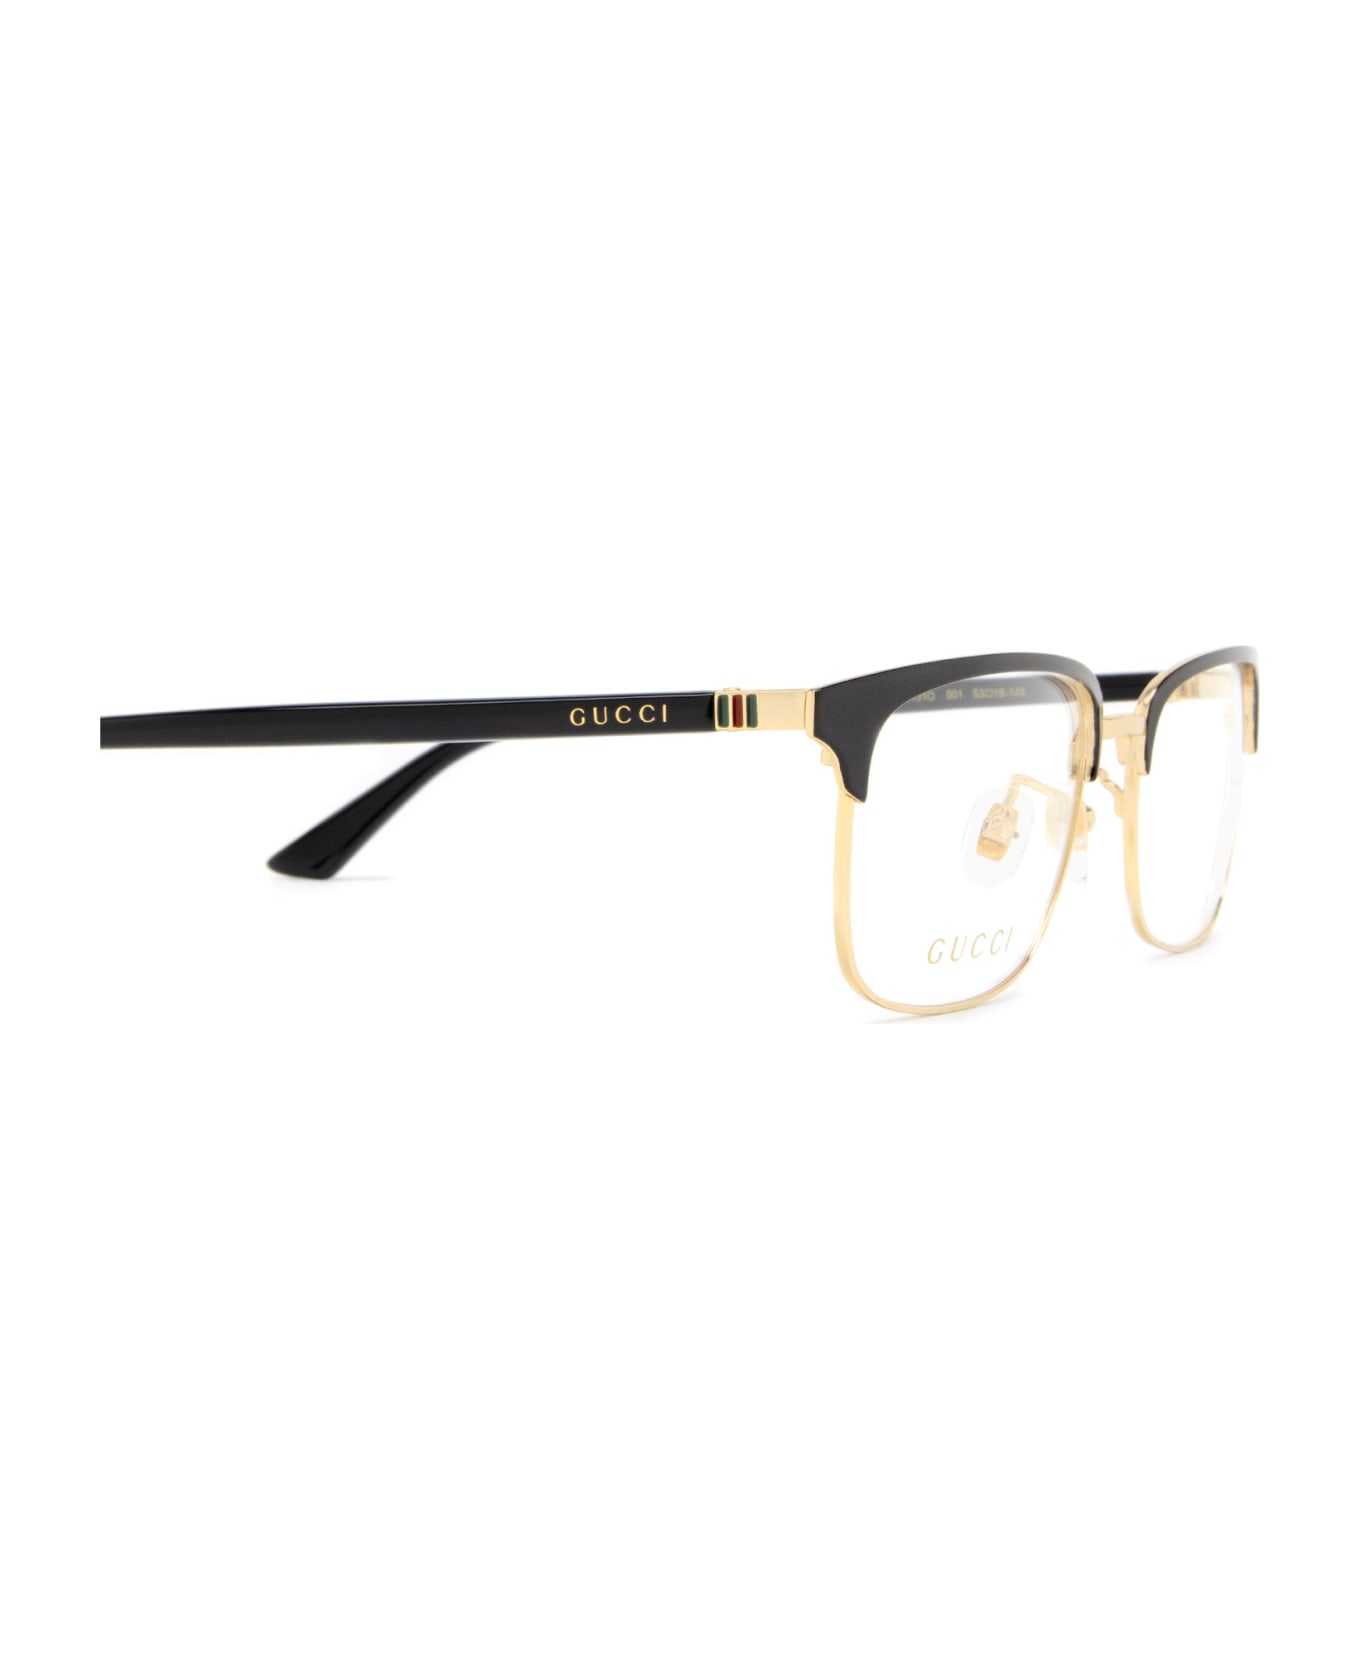 Gucci Eyewear Gg0131o Black Glasses - Black